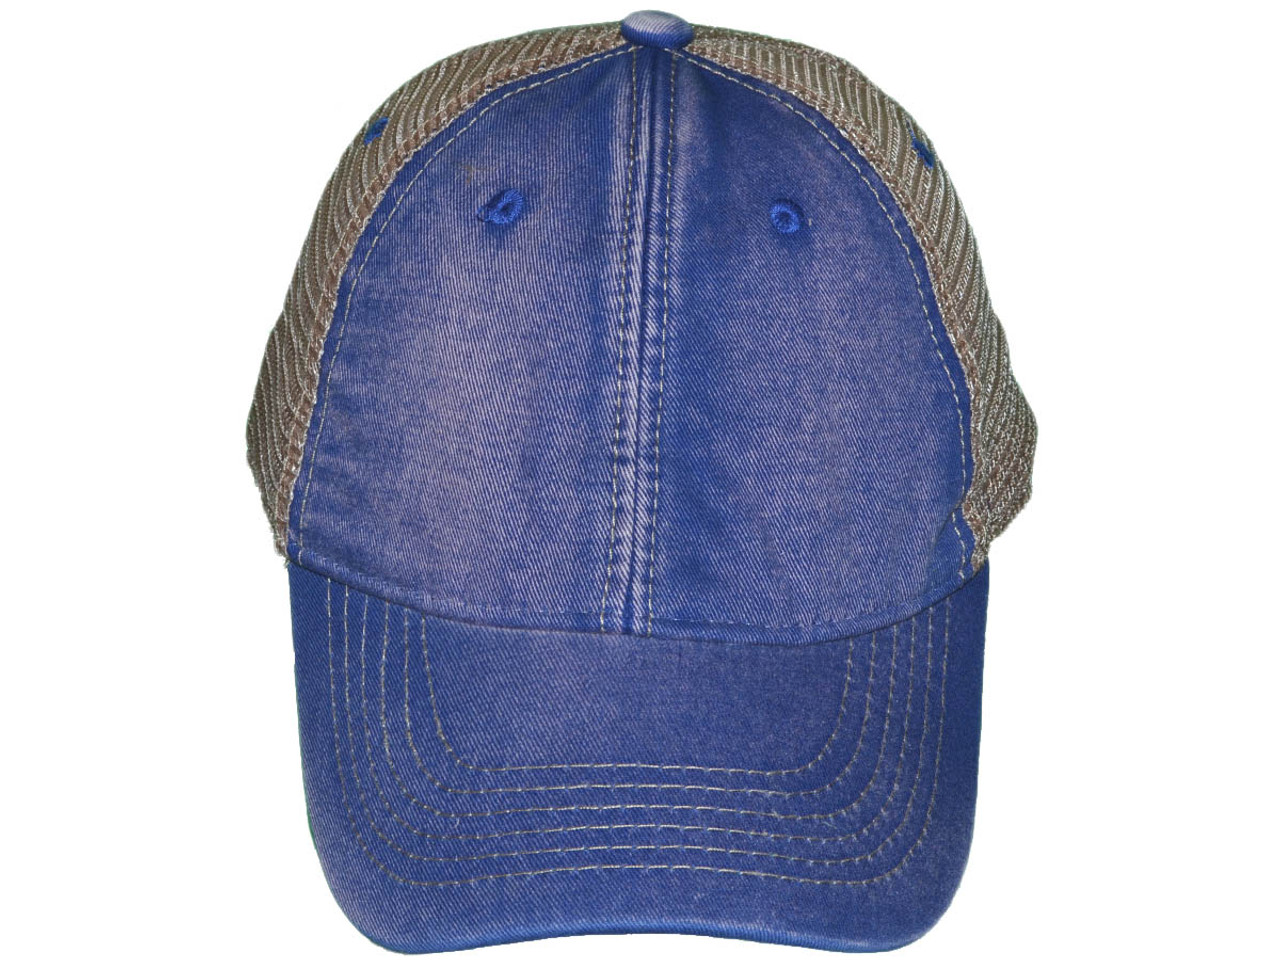 Vintage Trucker Hats - Unstructured Dirty Wash Cotton Low Profile BK Caps